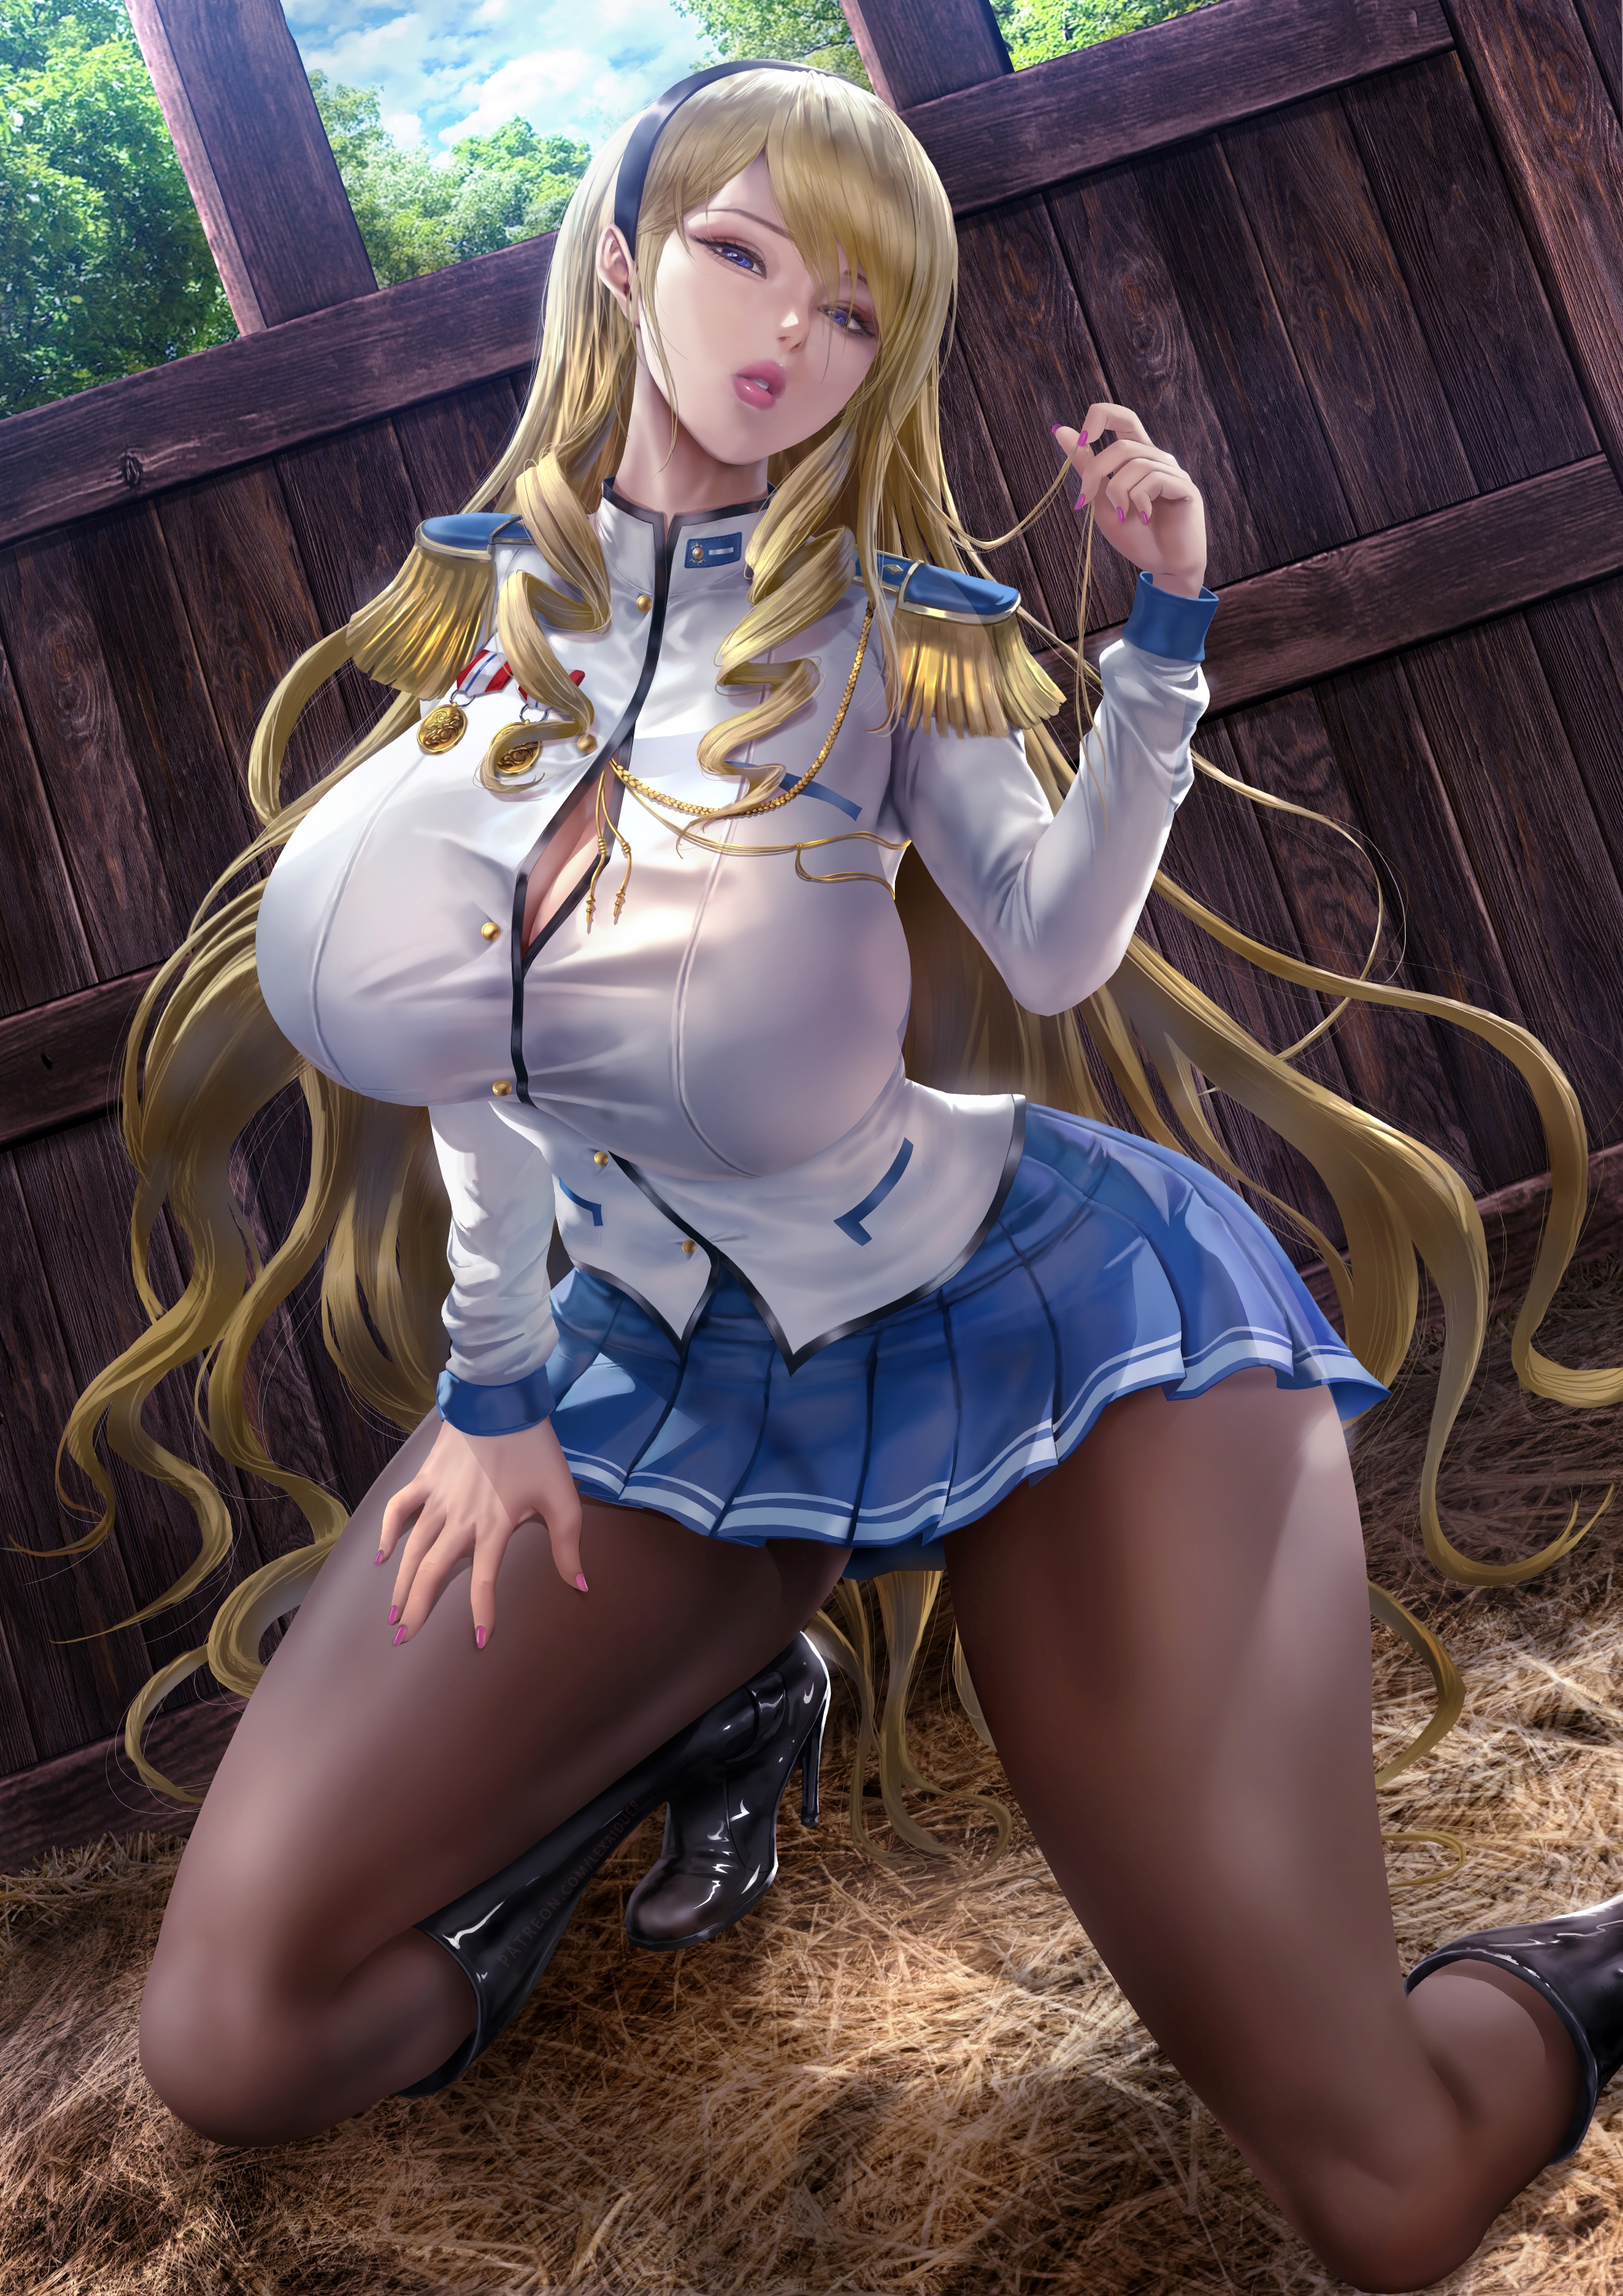 Anime 2100x2970 Lexaiduer fan art illustration digital art big boobs kneeling uniform pantyhose blonde long hair Walkure Romanze Celia Cumani Aintree